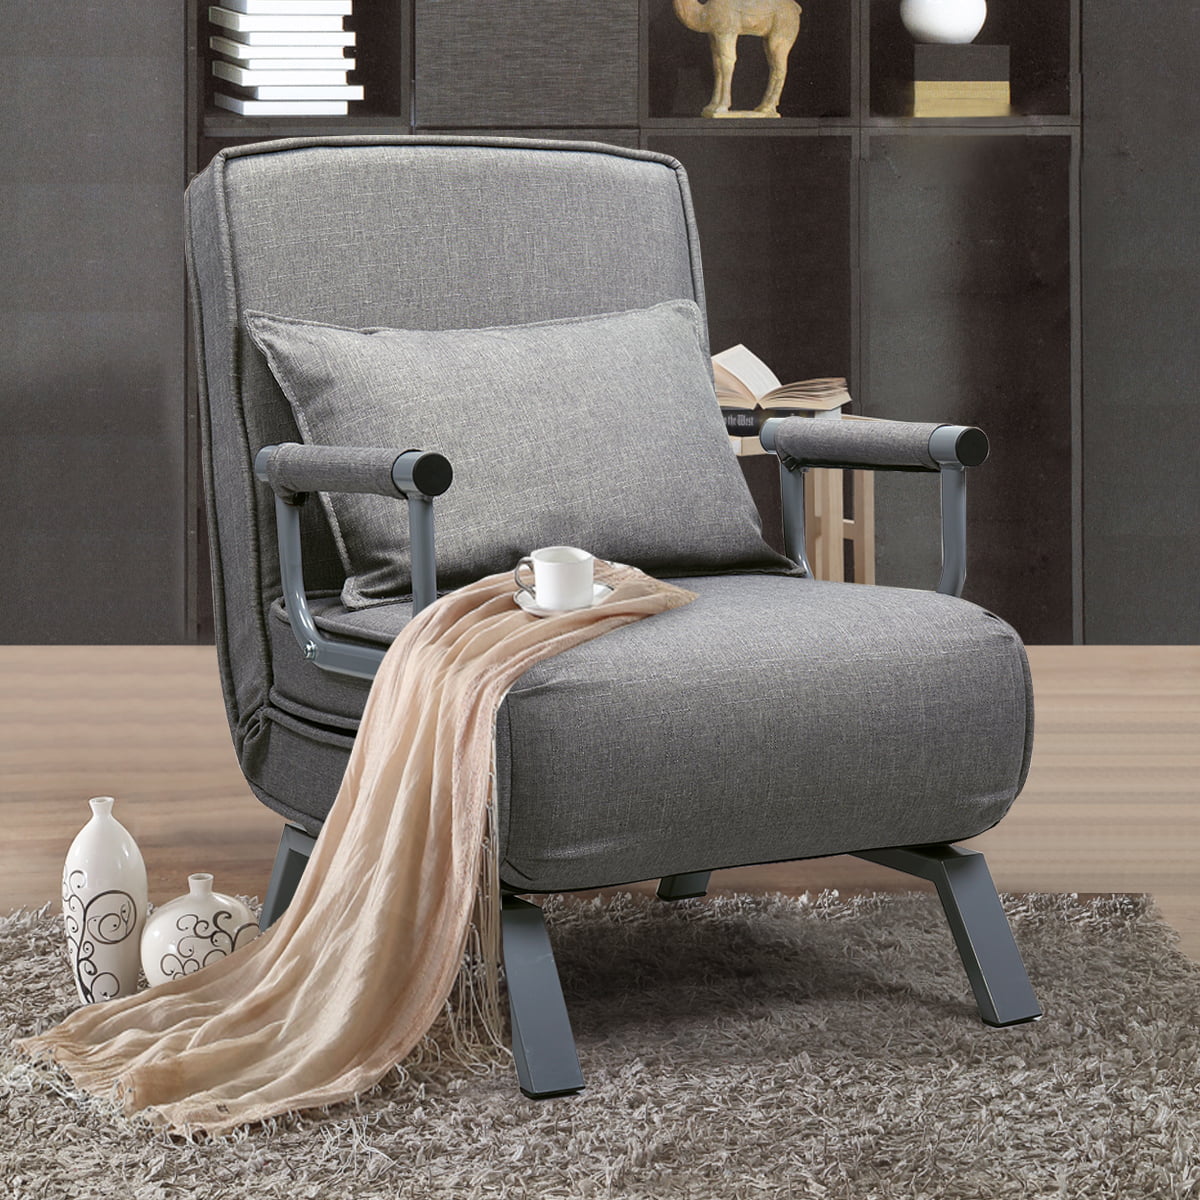 Jaxpety Fabric Folding Chaise Lounge Convertible Single Sleeper Sofa